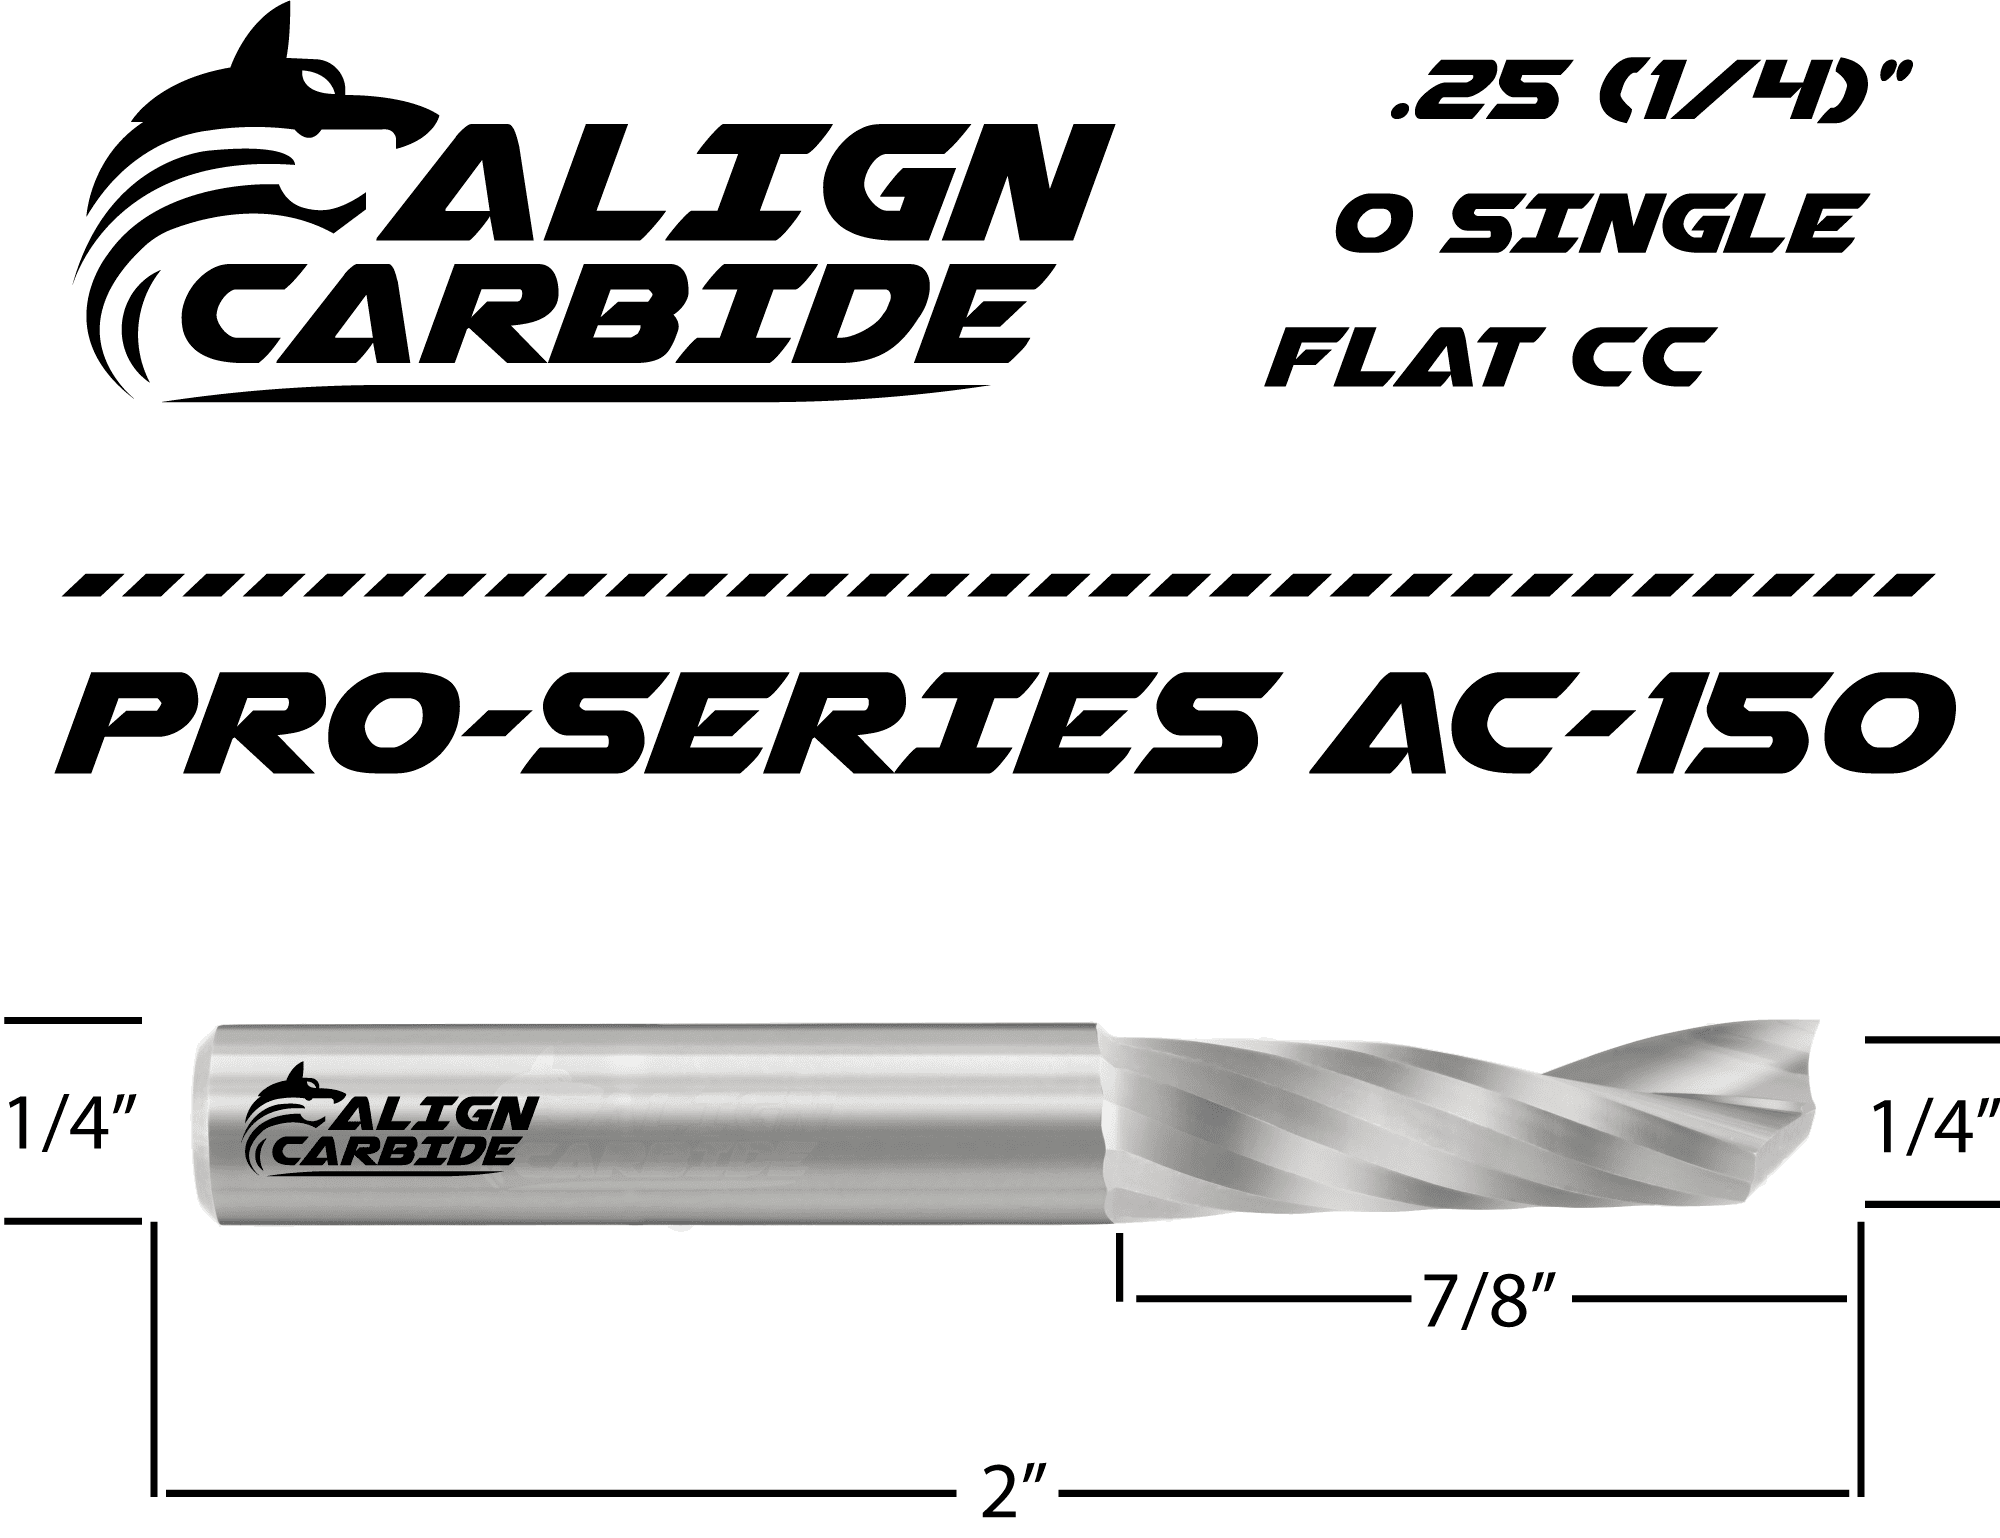 Align Carbide 1/4" Down Cut Spiral Plunge Flat 1/4" Shank Router Bit. 